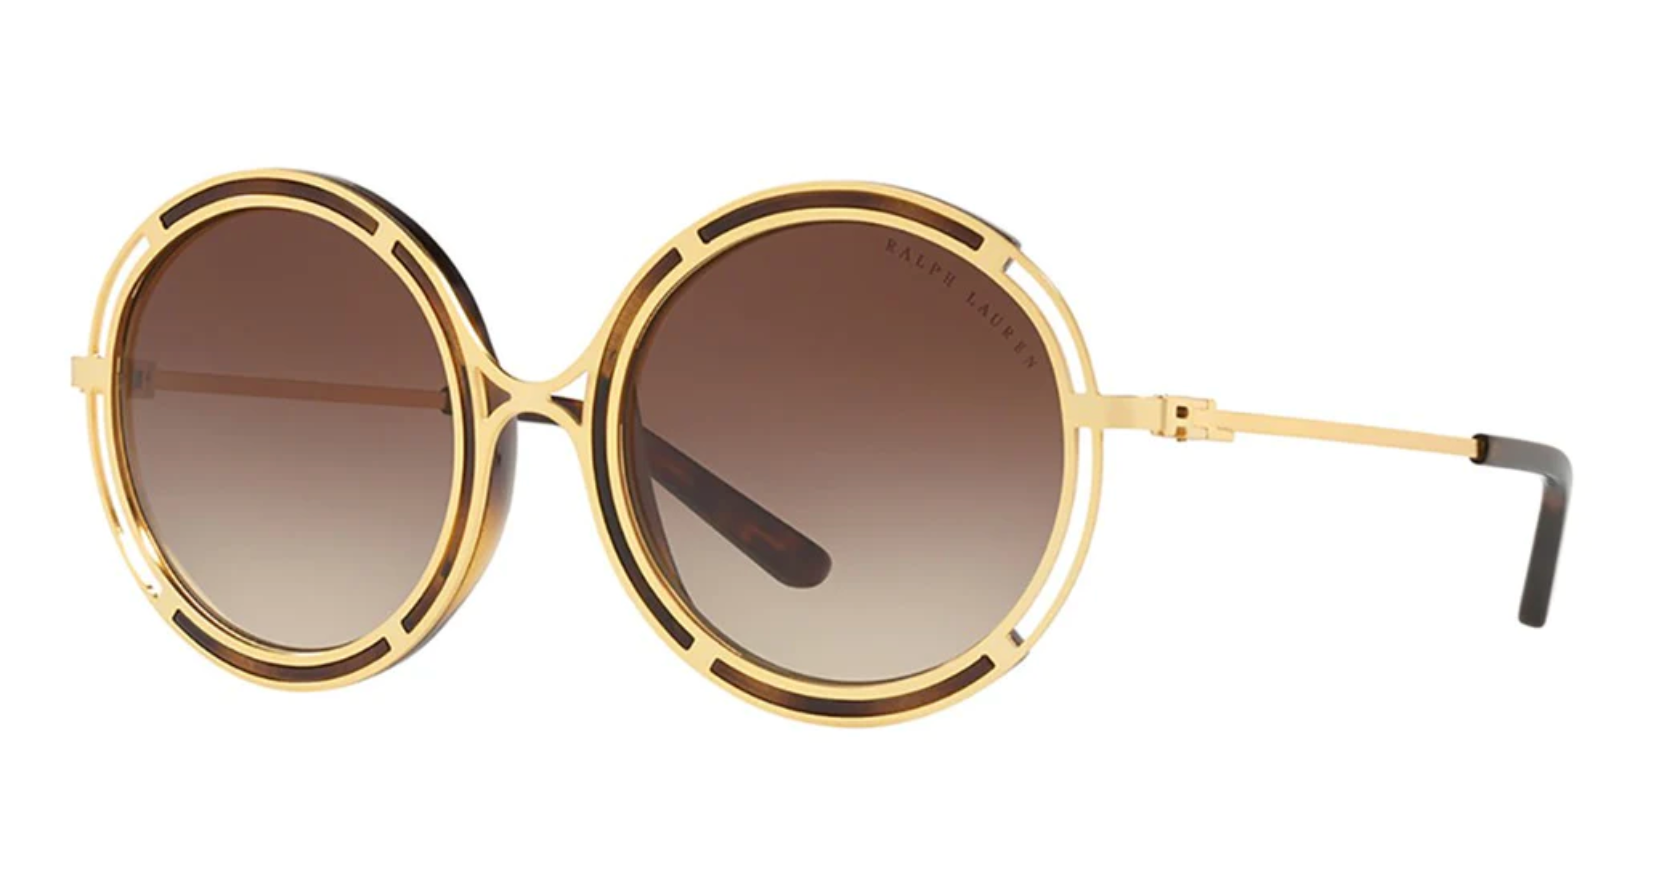 Ralph Lauren Women's Sunglasses Oversized Round Gold/Brown RL7060 934813